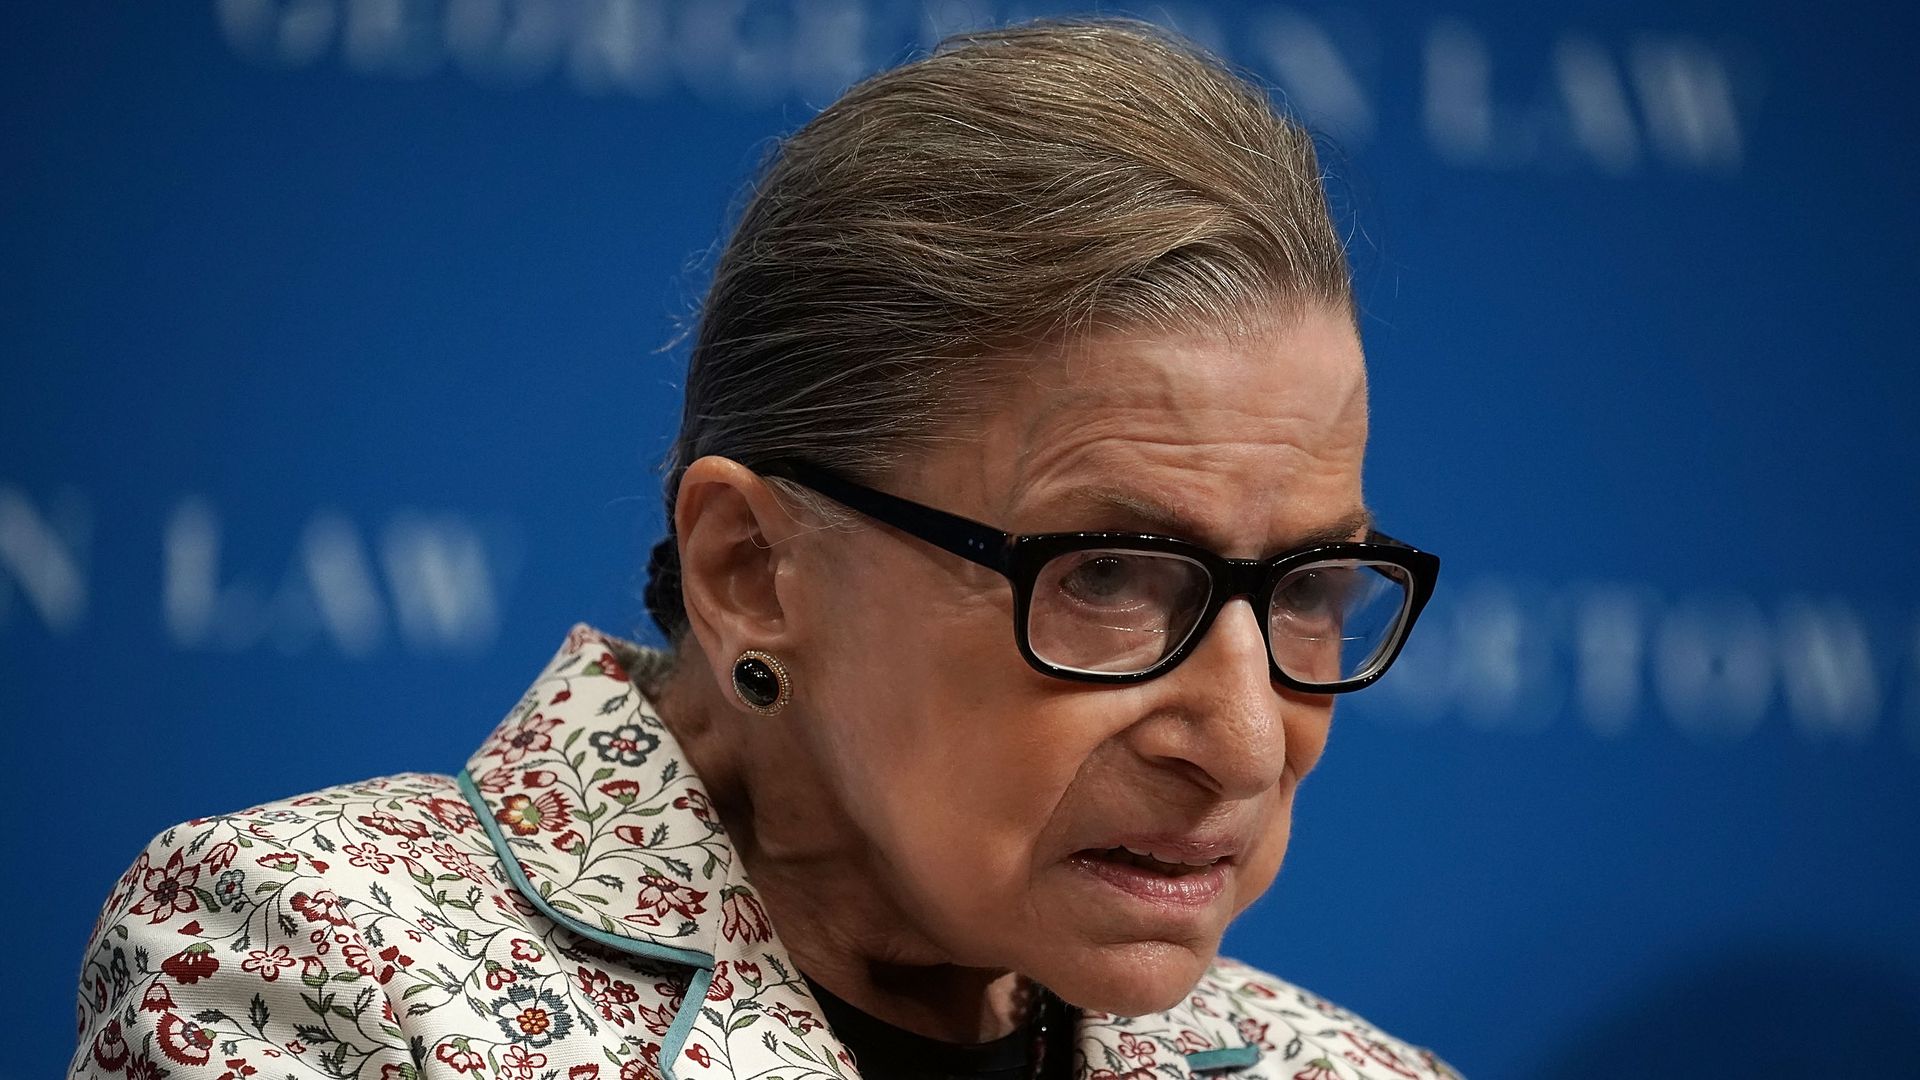 Ruth Bader Ginsburg looks tired.